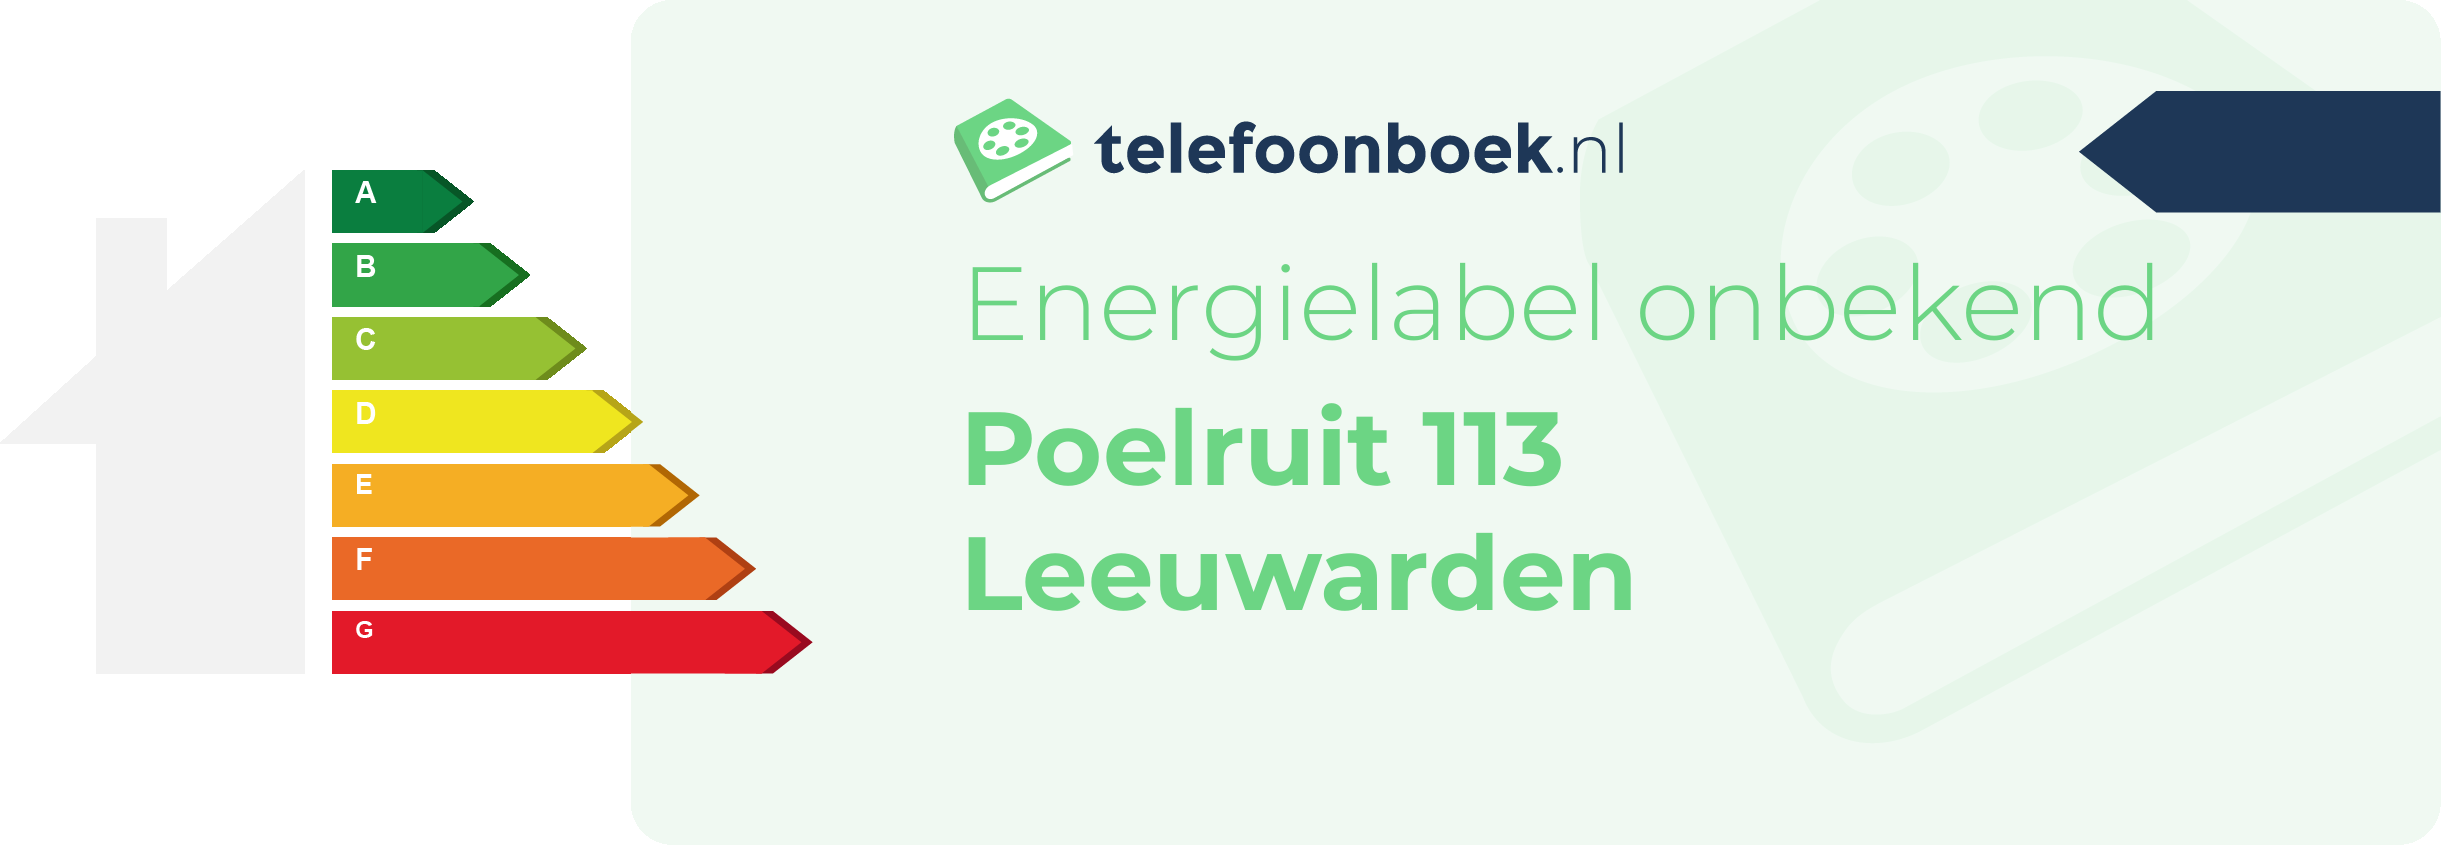 Energielabel Poelruit 113 Leeuwarden